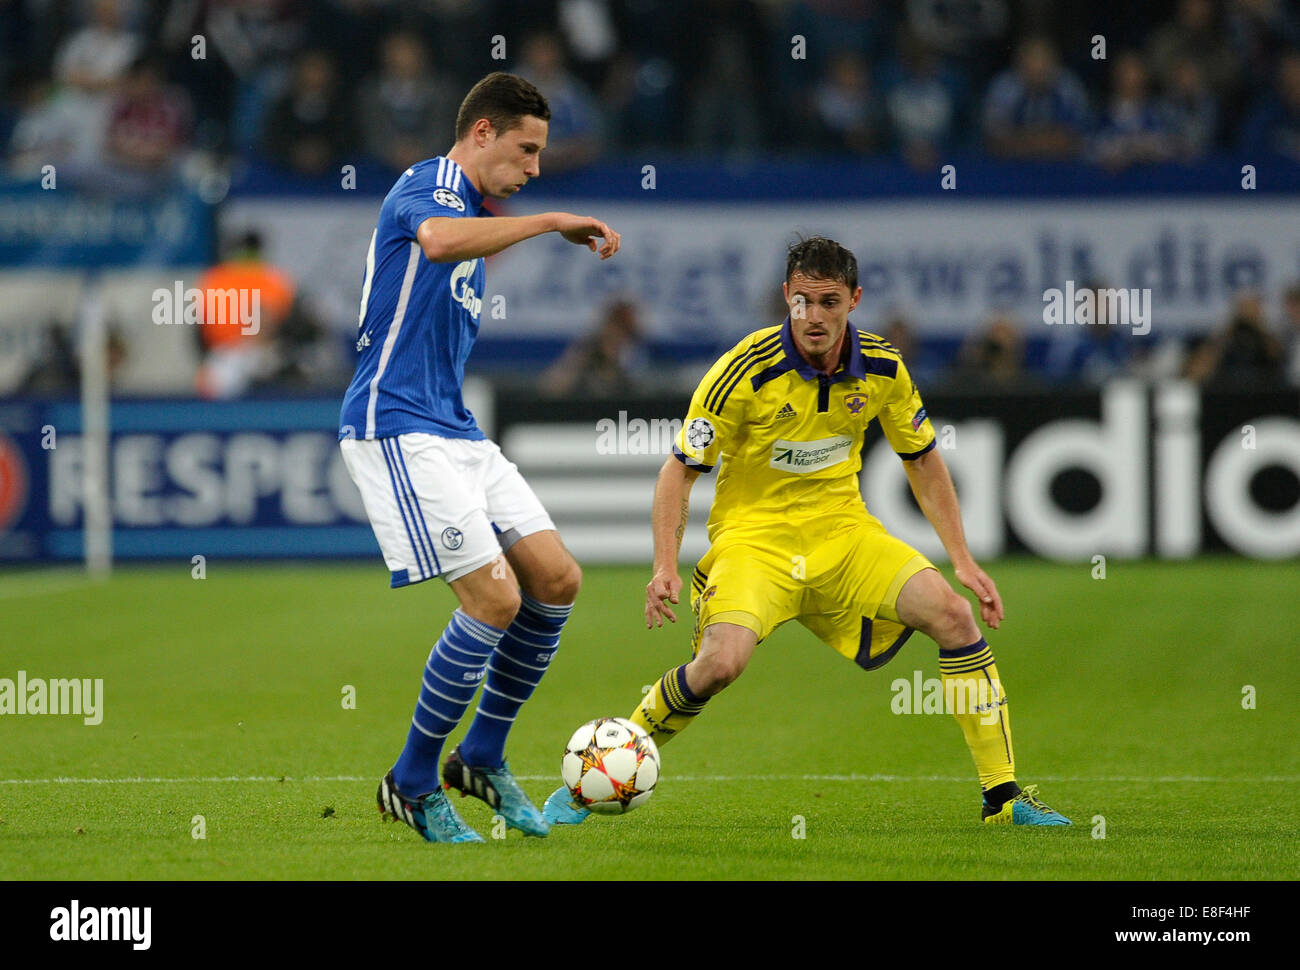 Gelsenkirchen, Germania 30.9.2014, Champions League 14/15 fase di gruppo, Schalke 04 - NK Maribor - Julian Draxler (S04) , Ales Mej Foto Stock